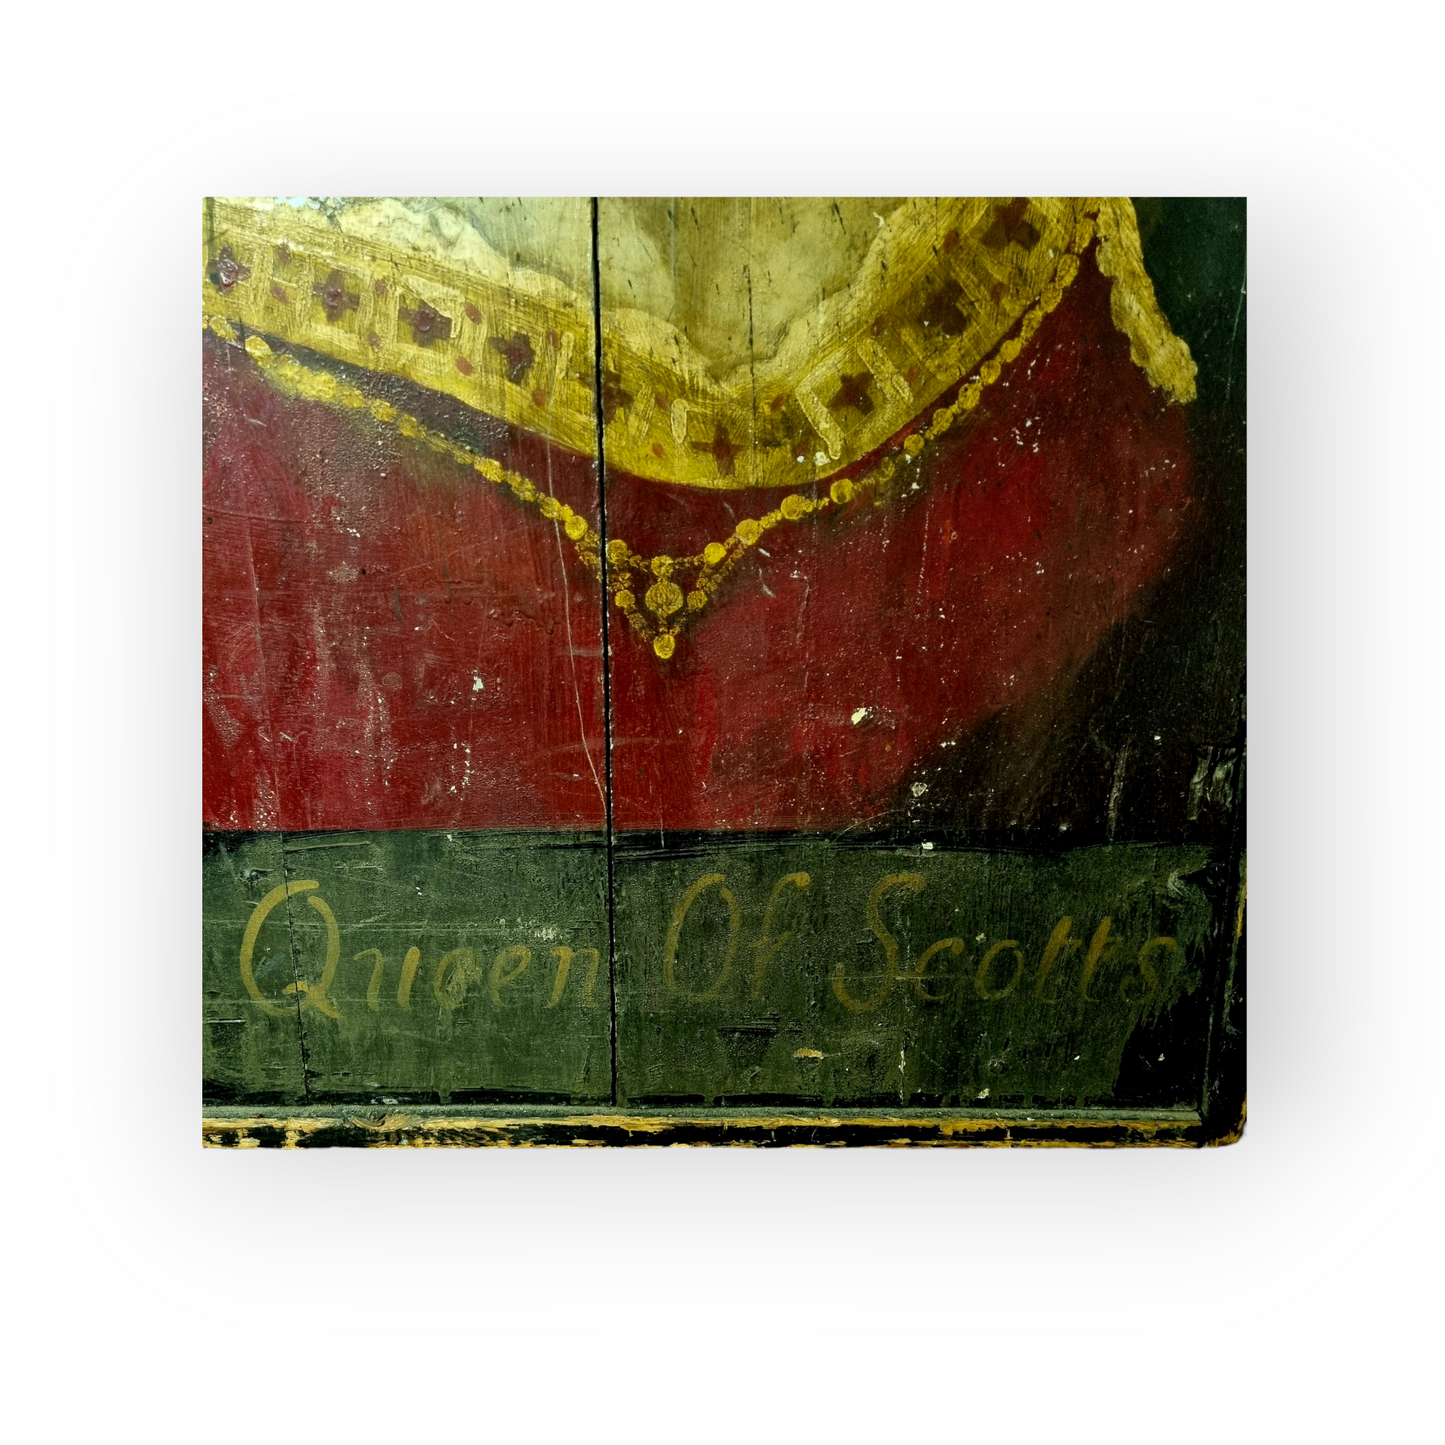 Large Late 18th Century Scottish Antique Pub / Tavern Sign "Queen of Scotts"